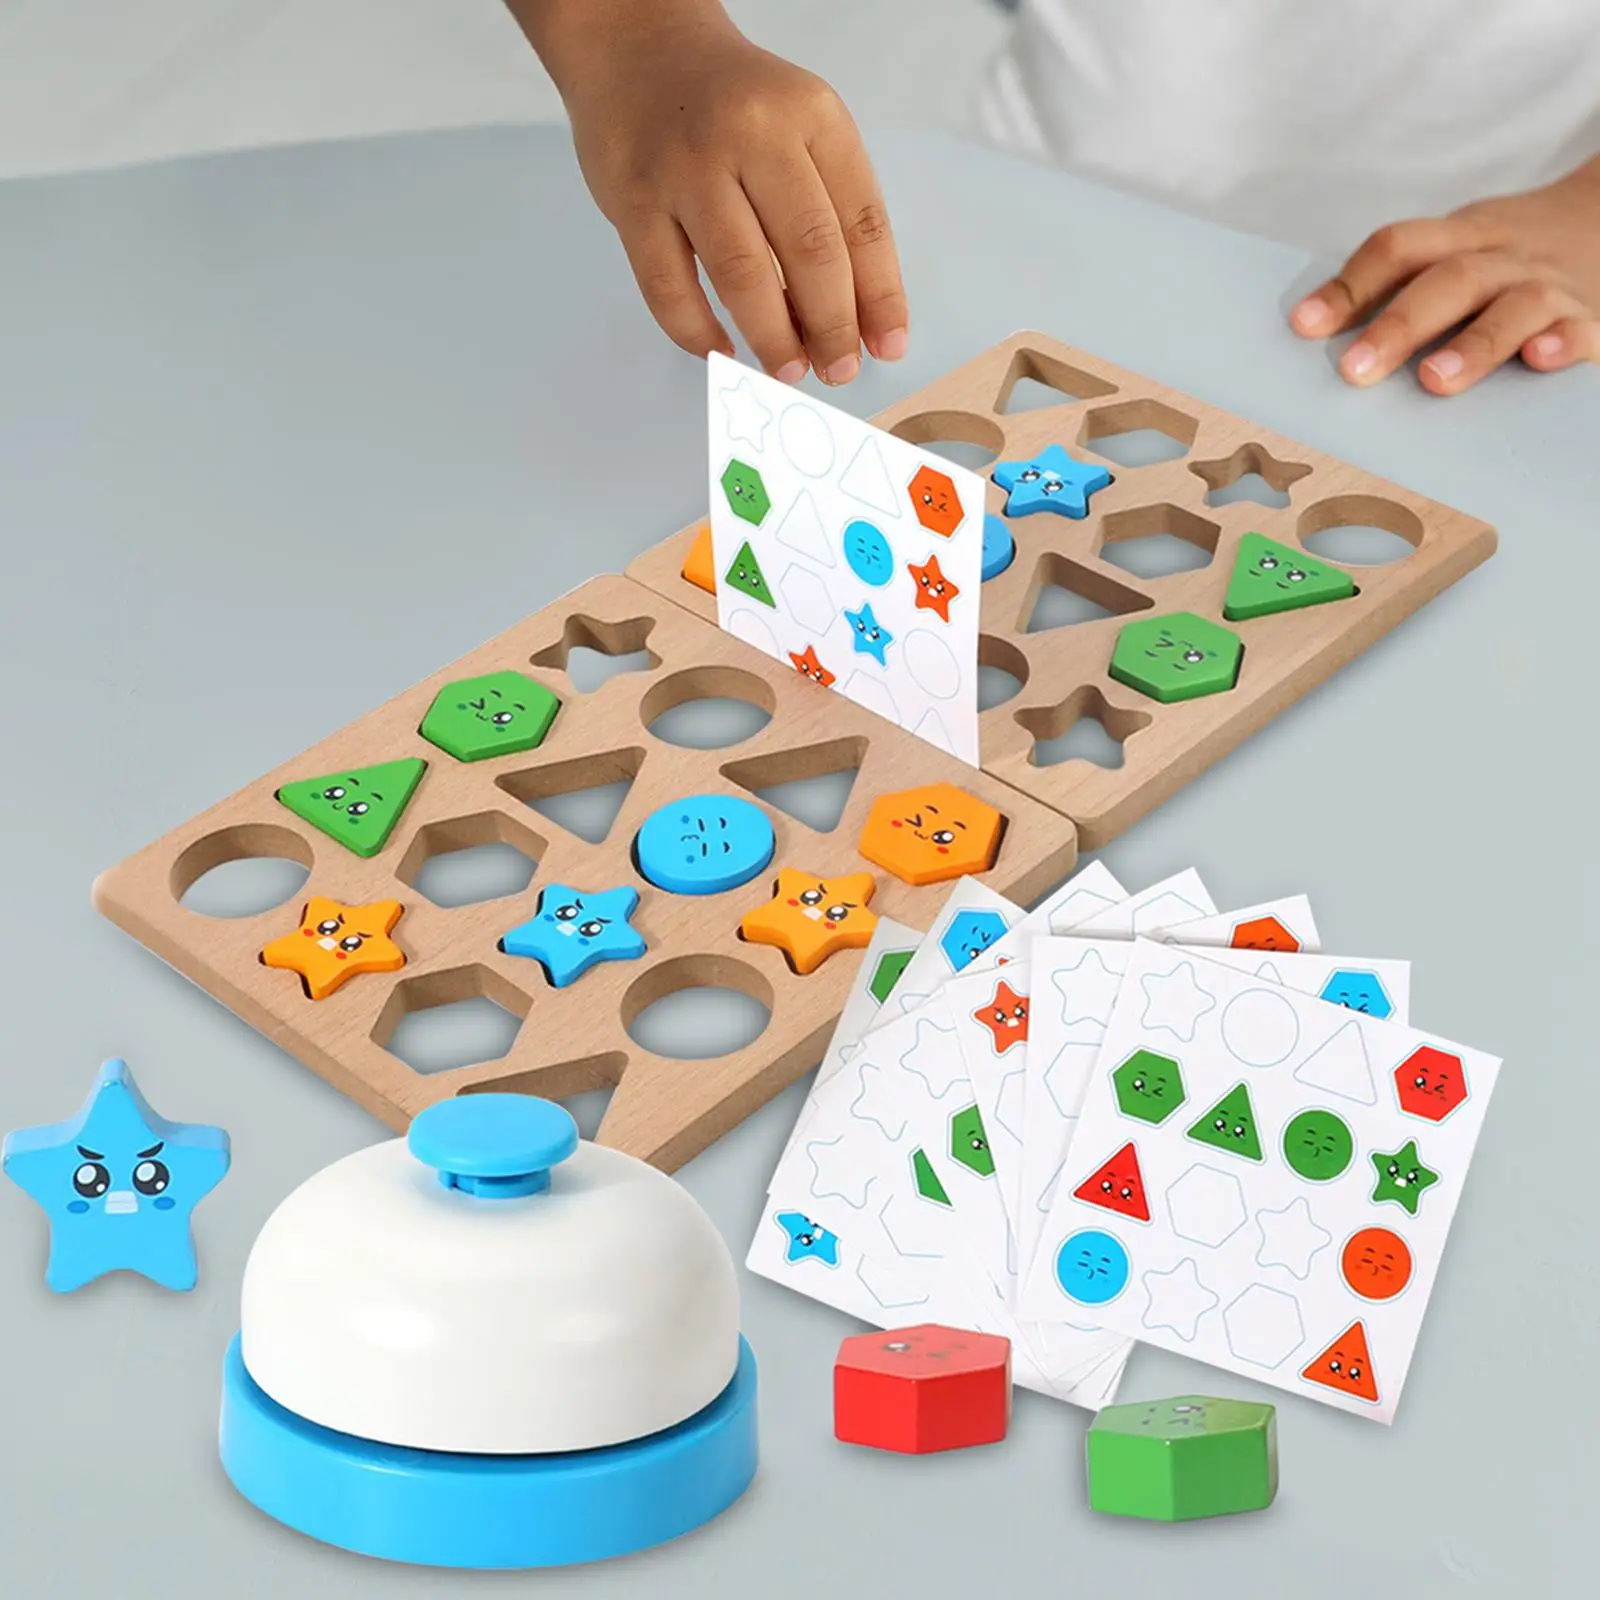 Montessori Wood Geometric Shape Matching Blocks Educational Toys Sensory Toys Developmental for Girls Boys Children Kids